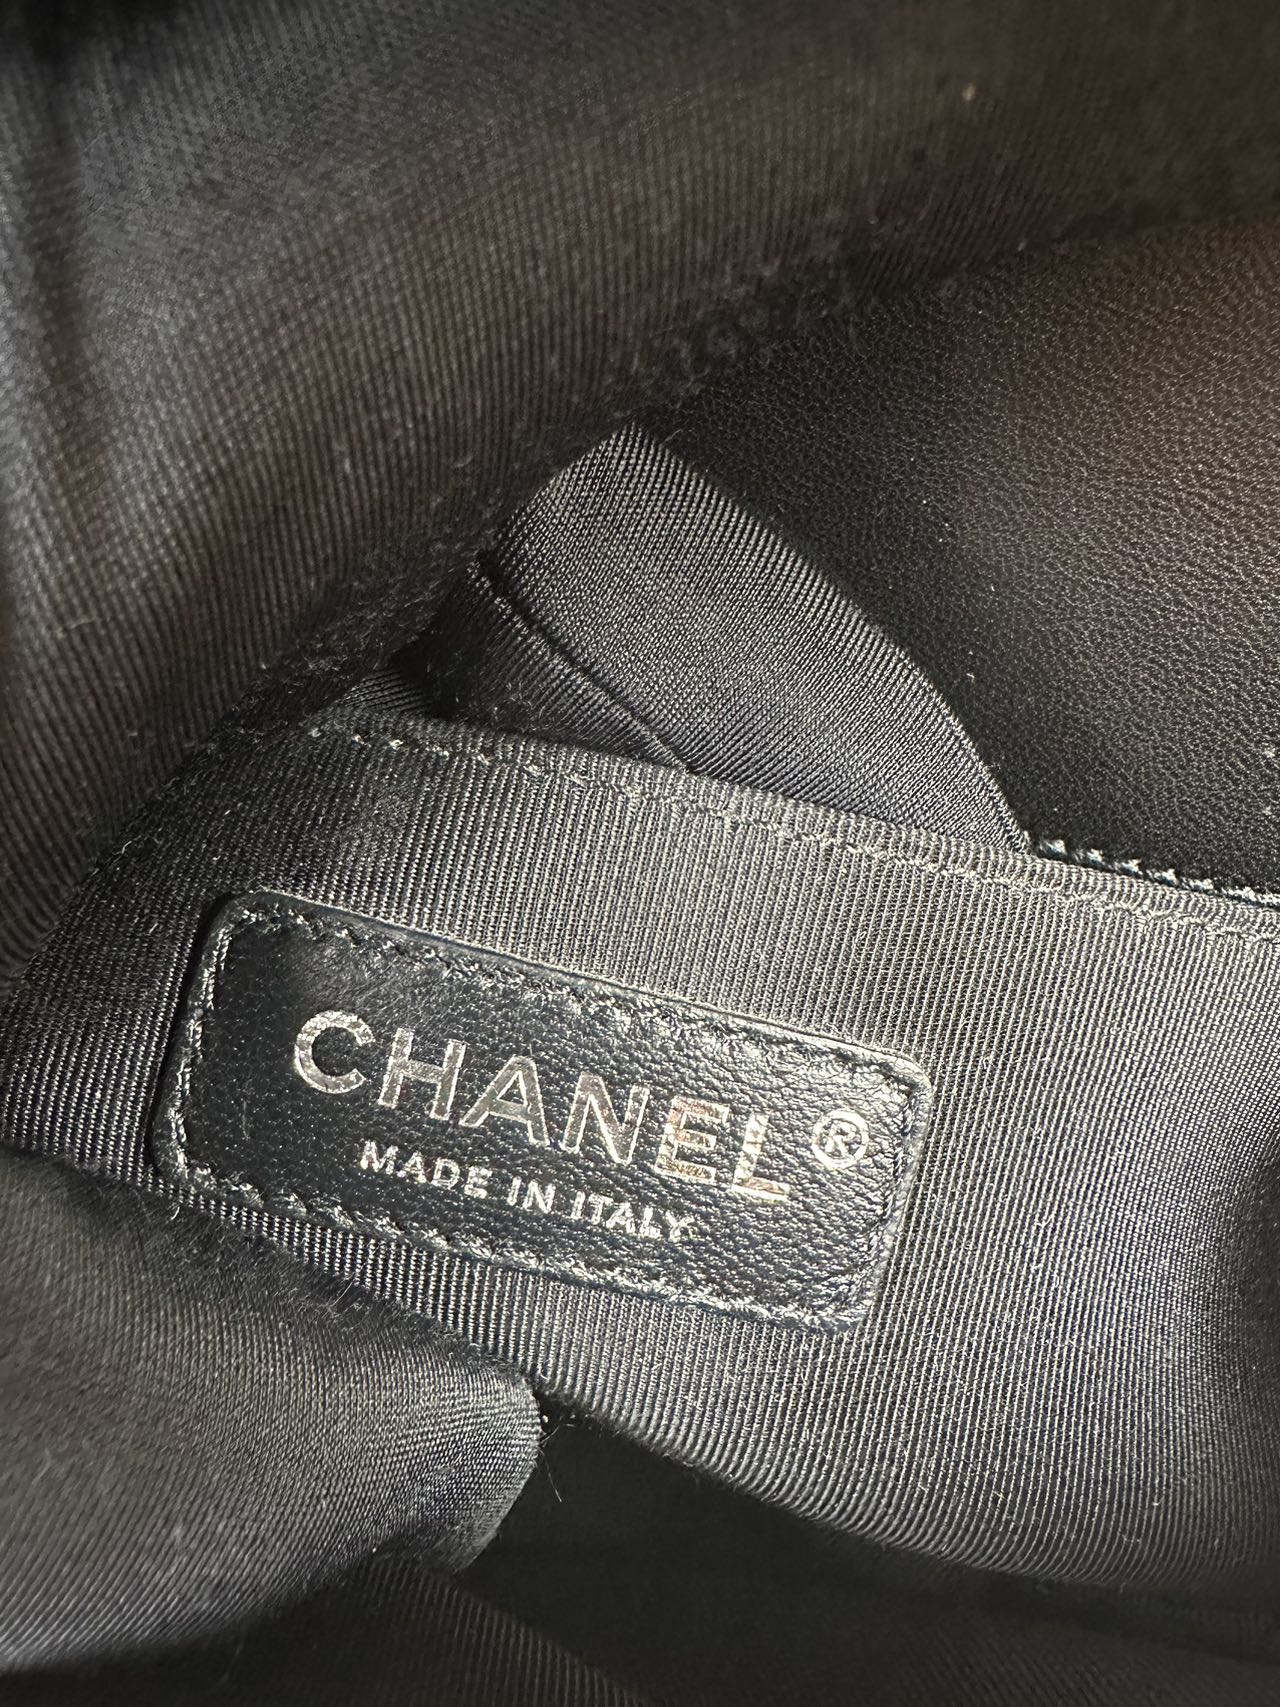 Preloved Chanel Black Leather Lambskin Small Boy Bag Crossbody